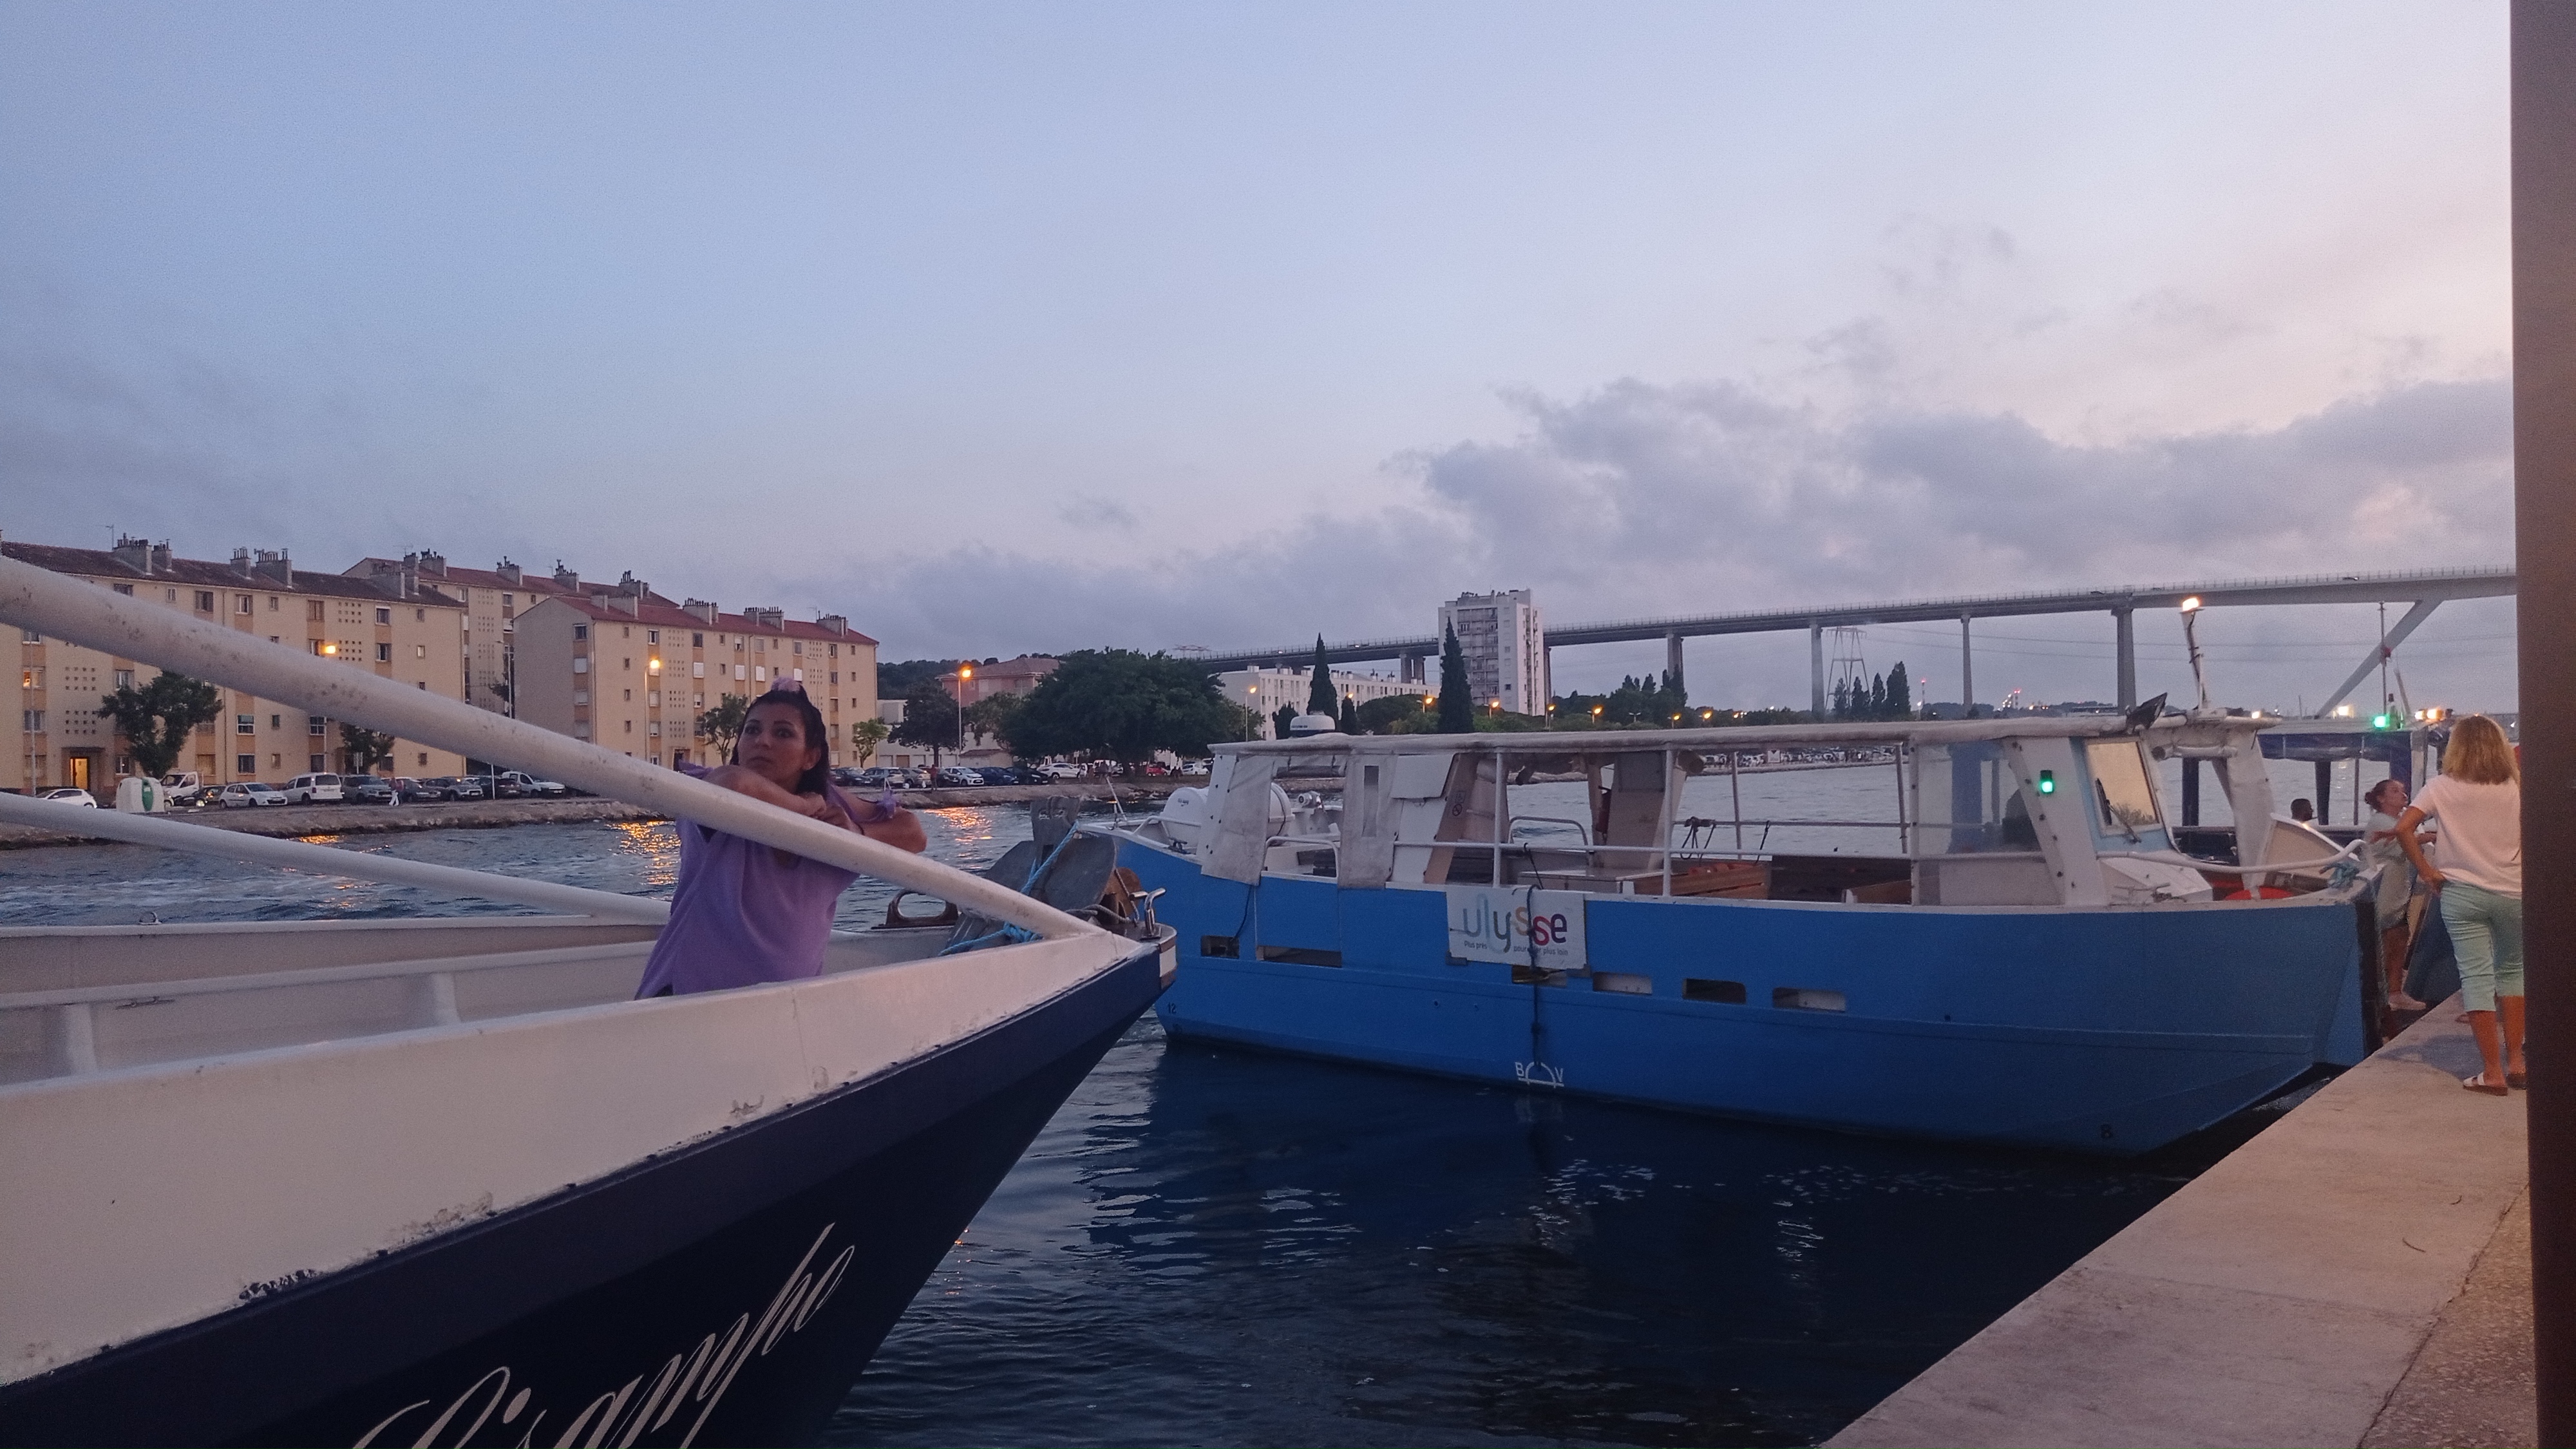 Les balades en bateaux Martigues - © Otmartigues / MyriamF